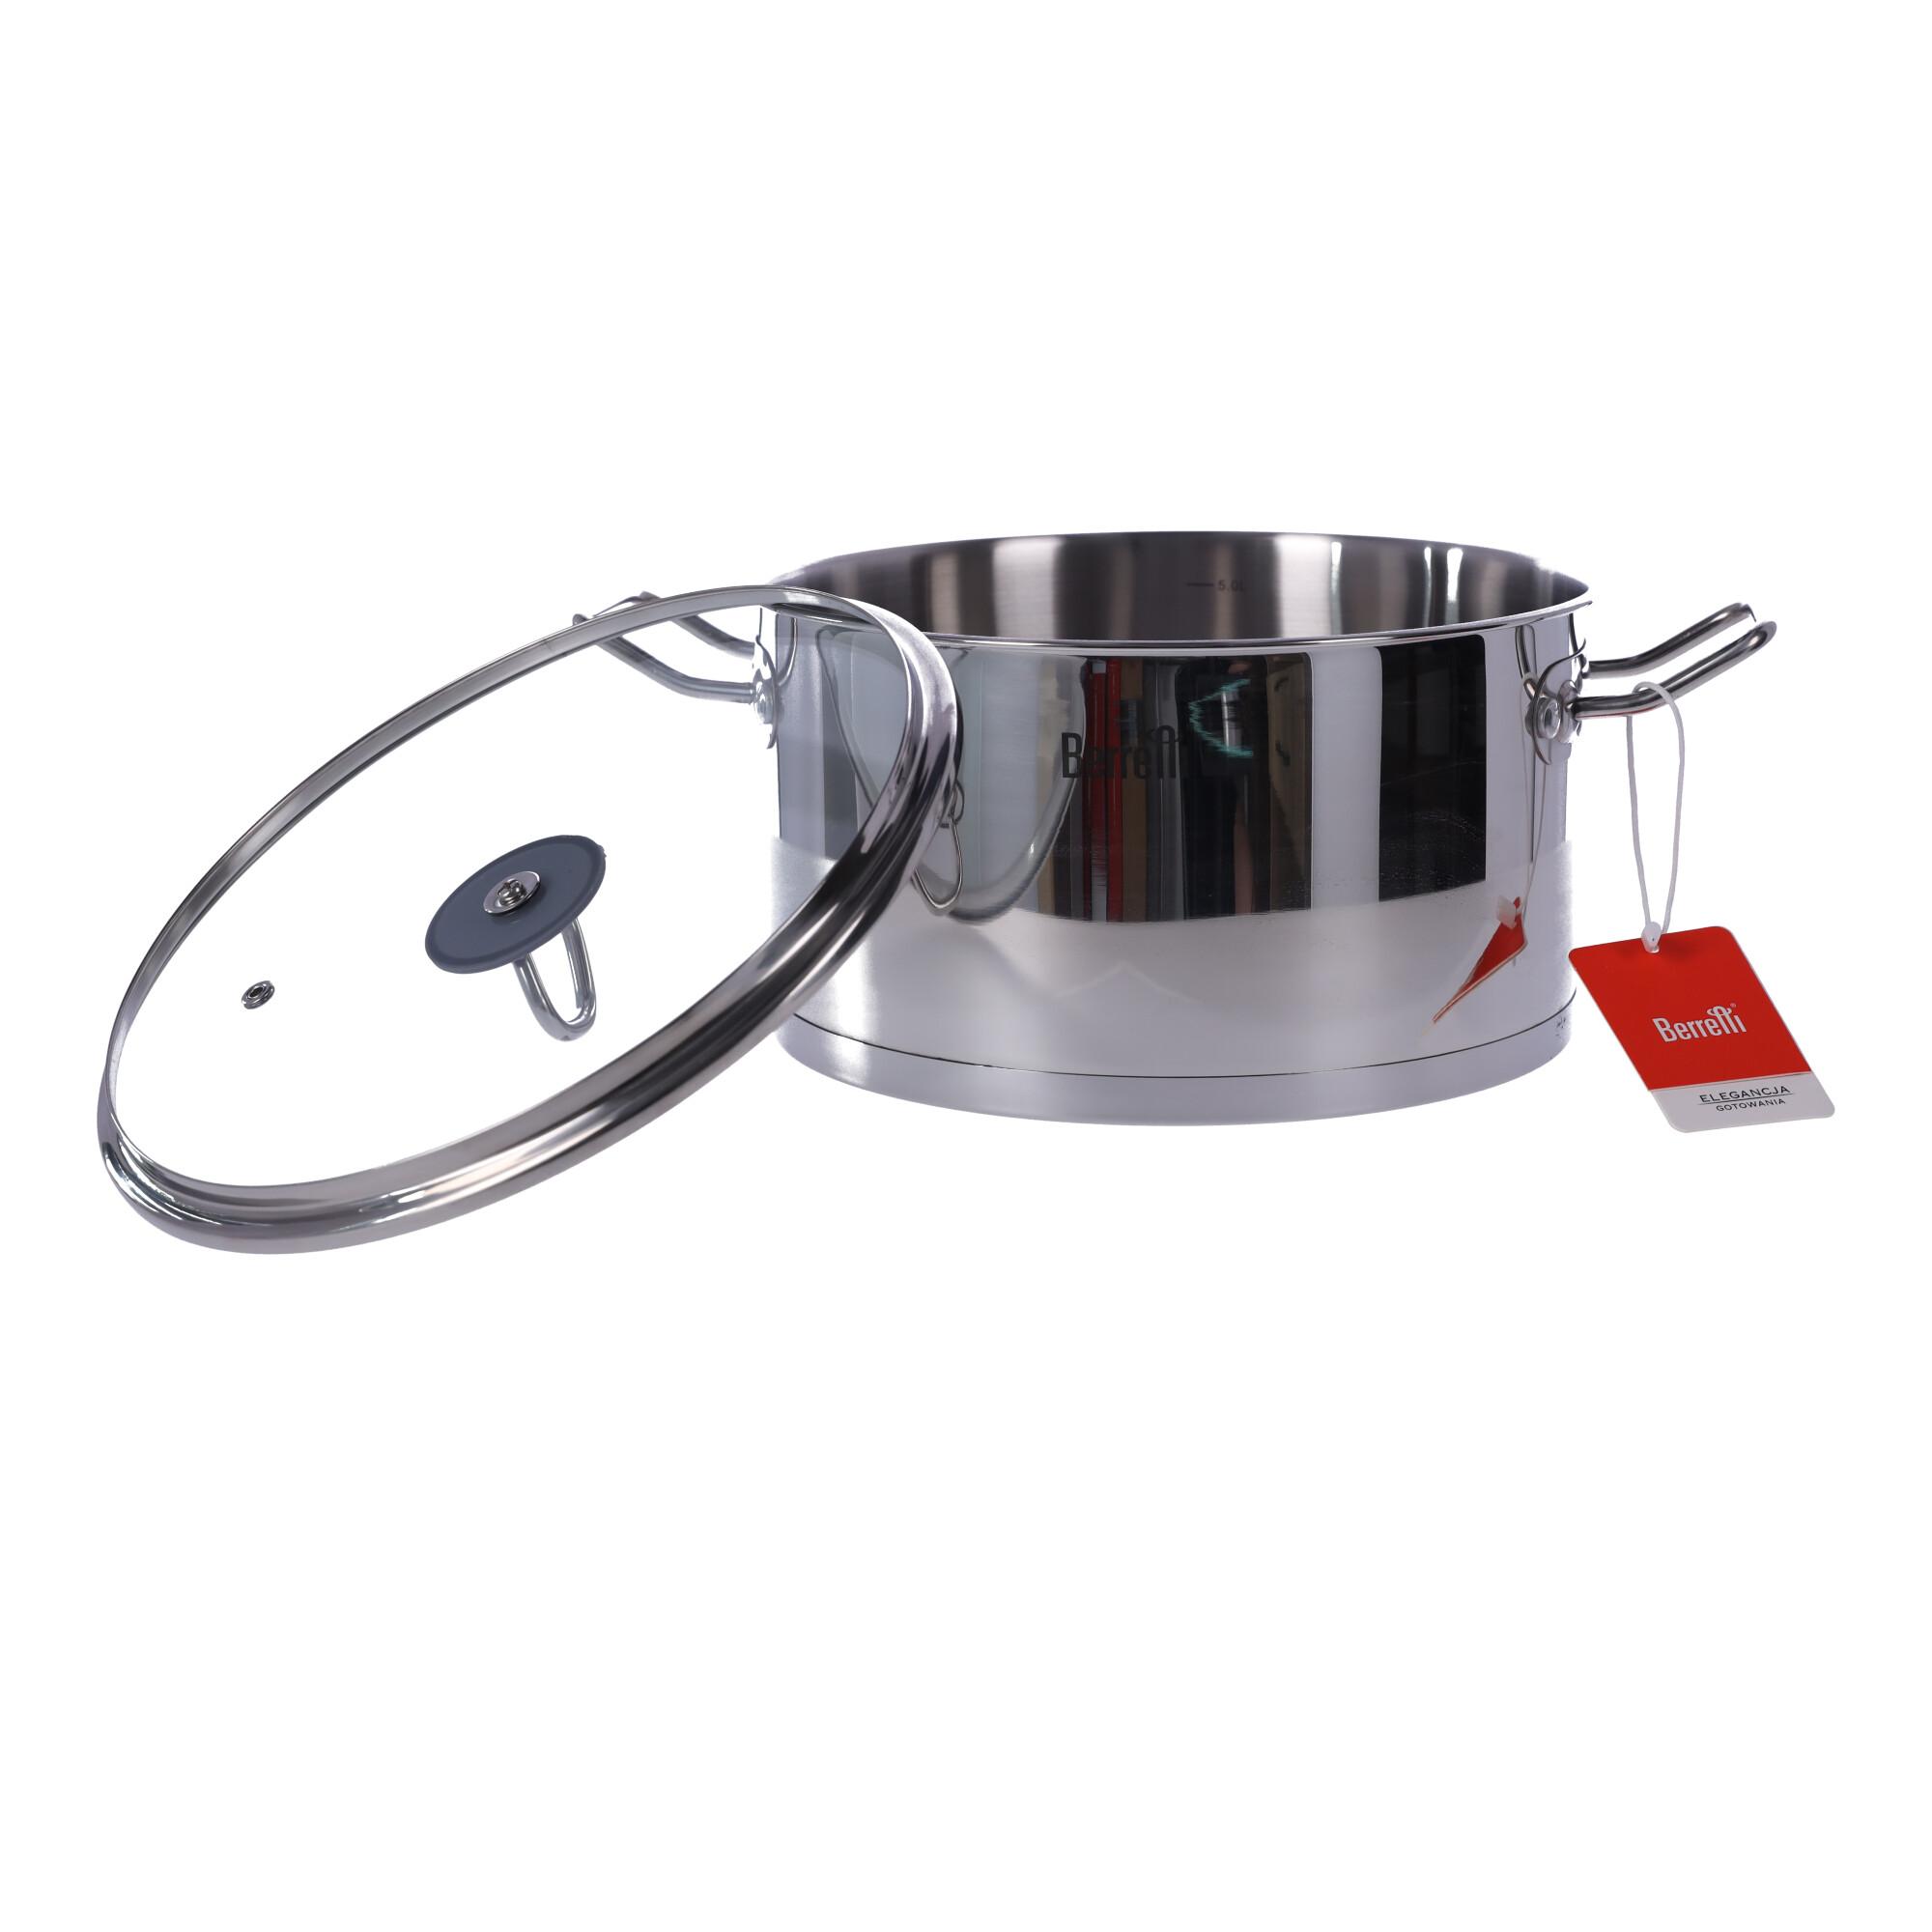 Stainless steel pot with lid Gemini BERRETTI, 24 cm